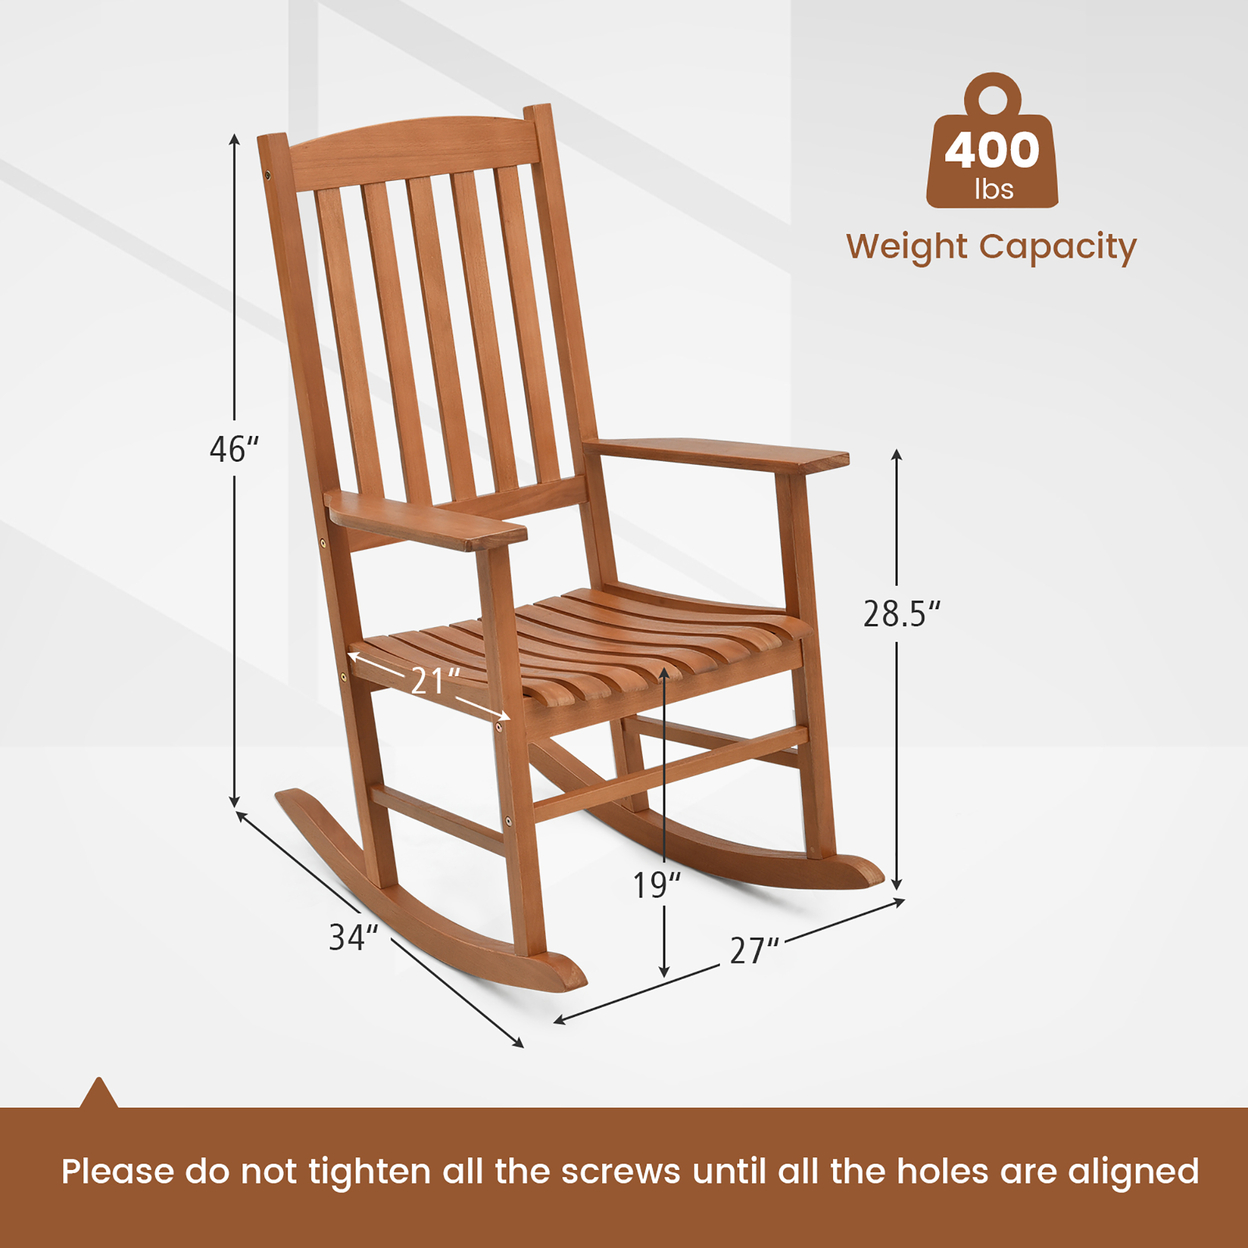 Patio Rocking Chair W/ 400 Lbs Weight Capacity Eucalyptus Wood Porch Rocker W/ High Back